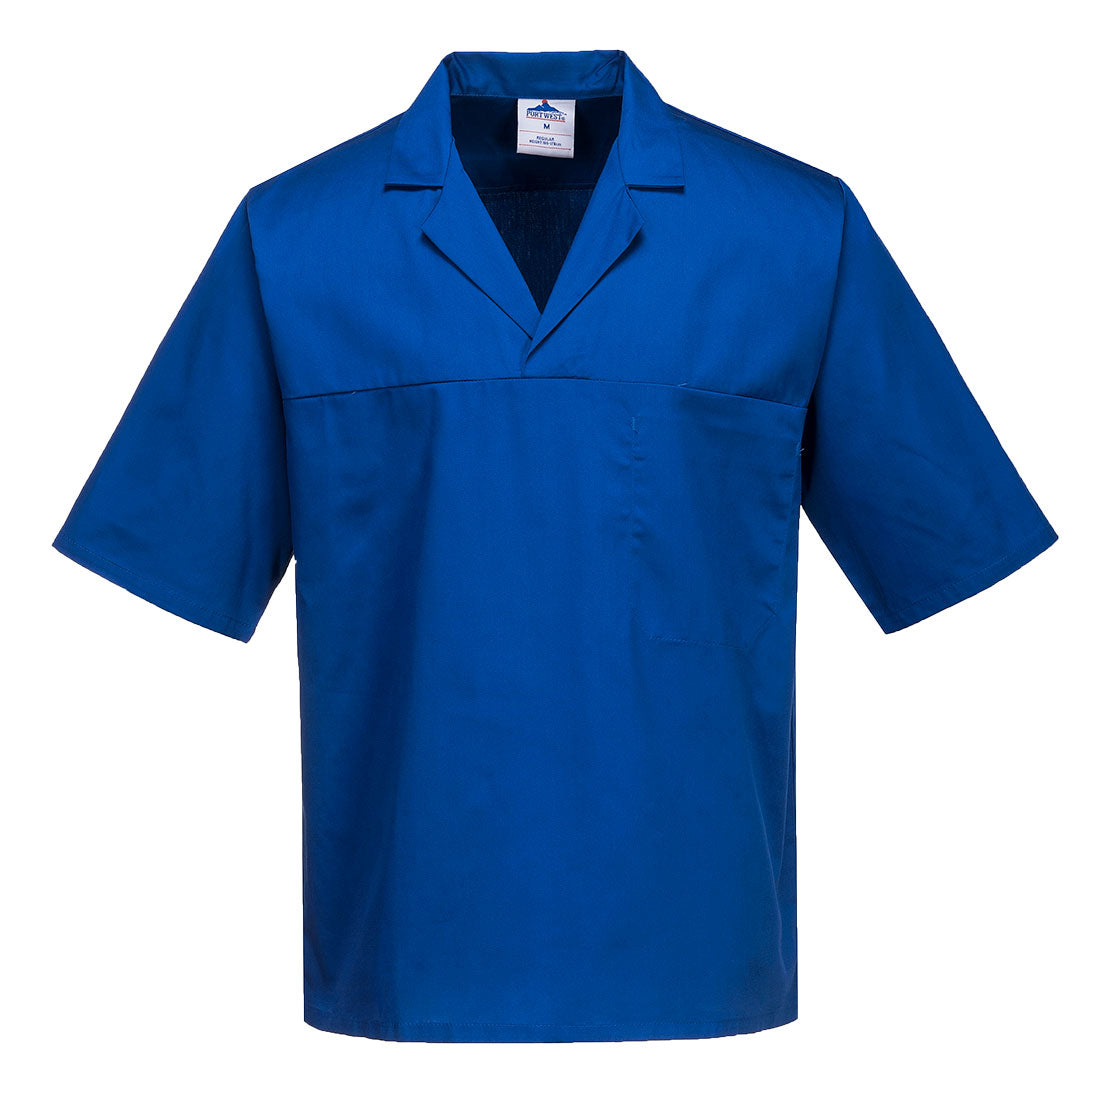 Portwest 2209 - Royal Blue Food Industry Short Sleeve Baker Shirt sz Small Regular